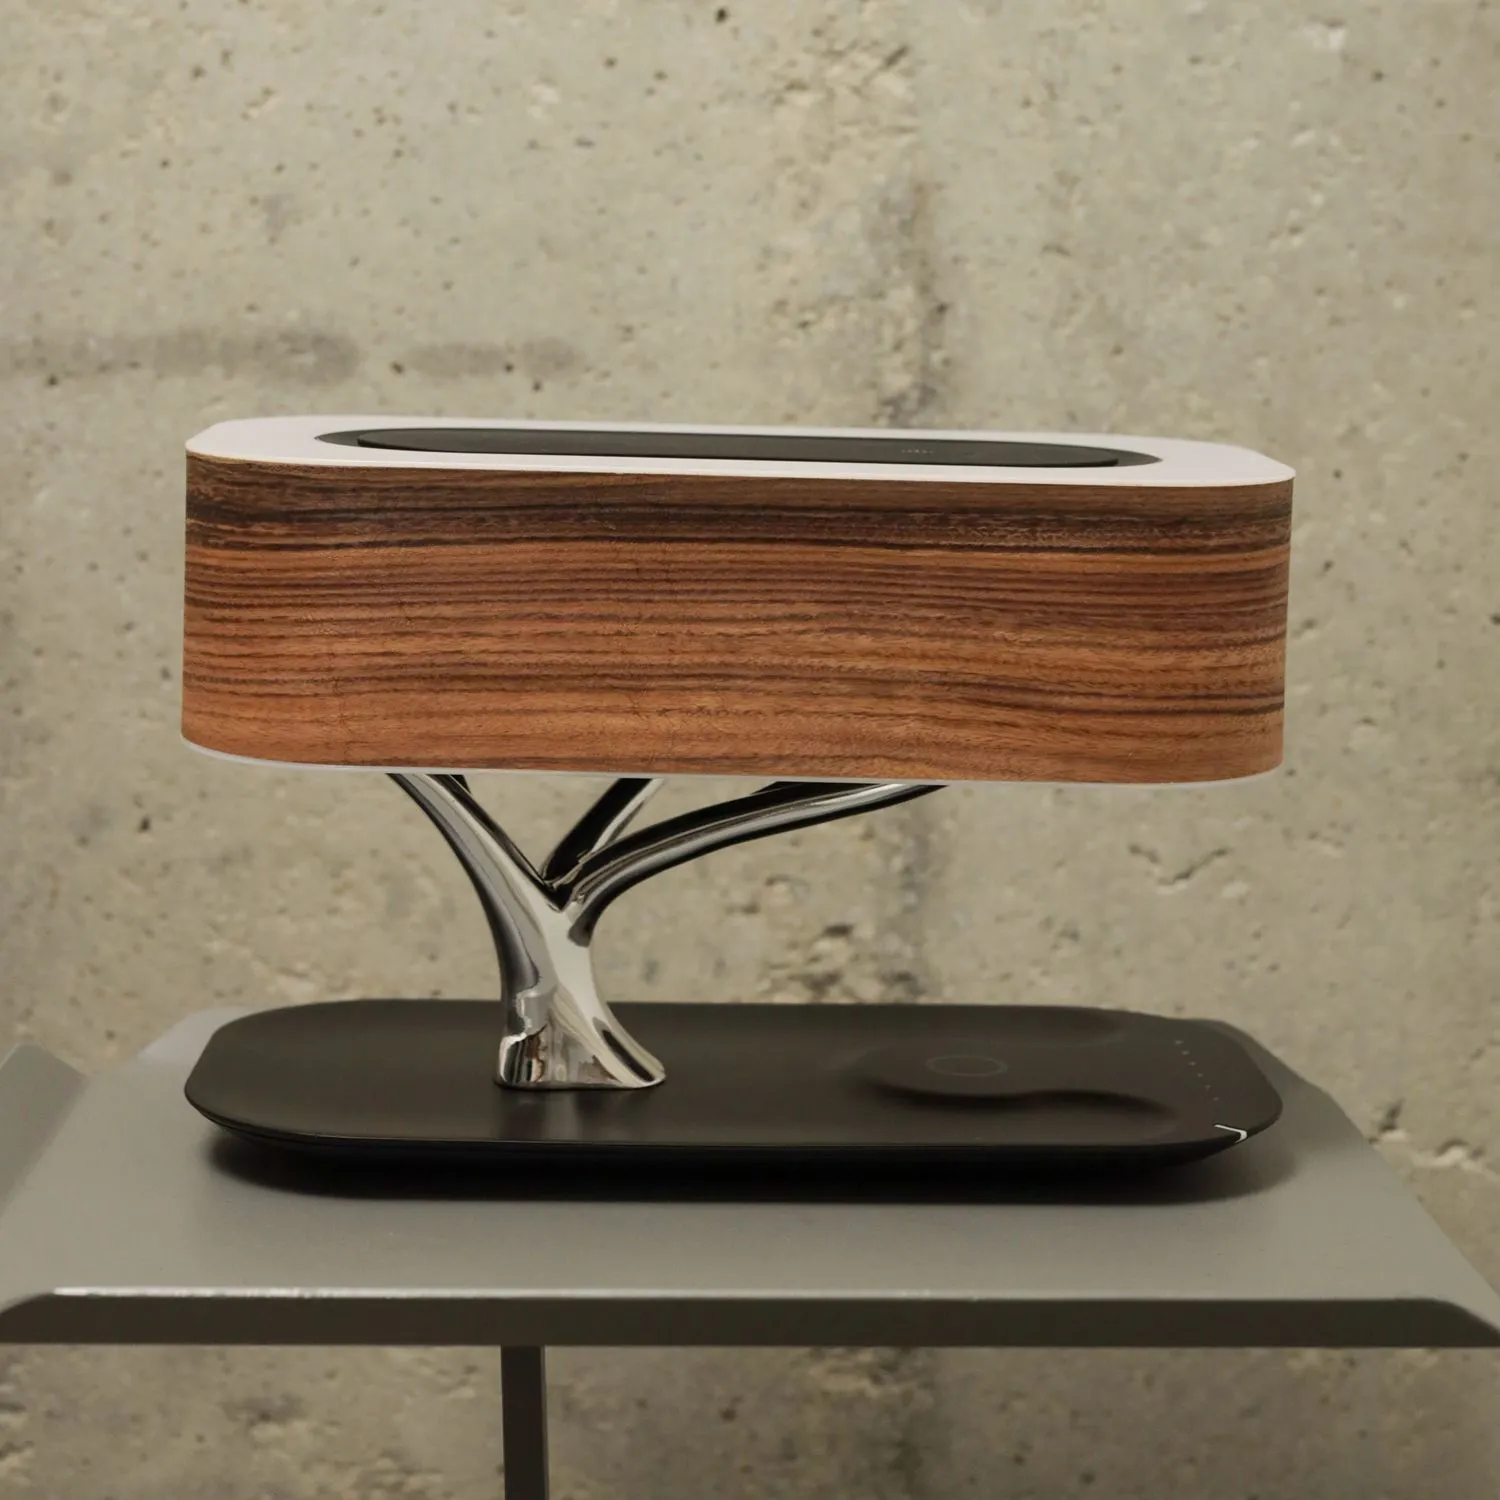 प्राकृतिक लकड़ी और मिश्र धातु स्मार्ट घर एलईडी टेबल लैंप वायरलेस चार्ज डेस्क दीपक के साथ बीटी स्पीकर 10W पेड़ दीपक संगीत रात को प्रकाश